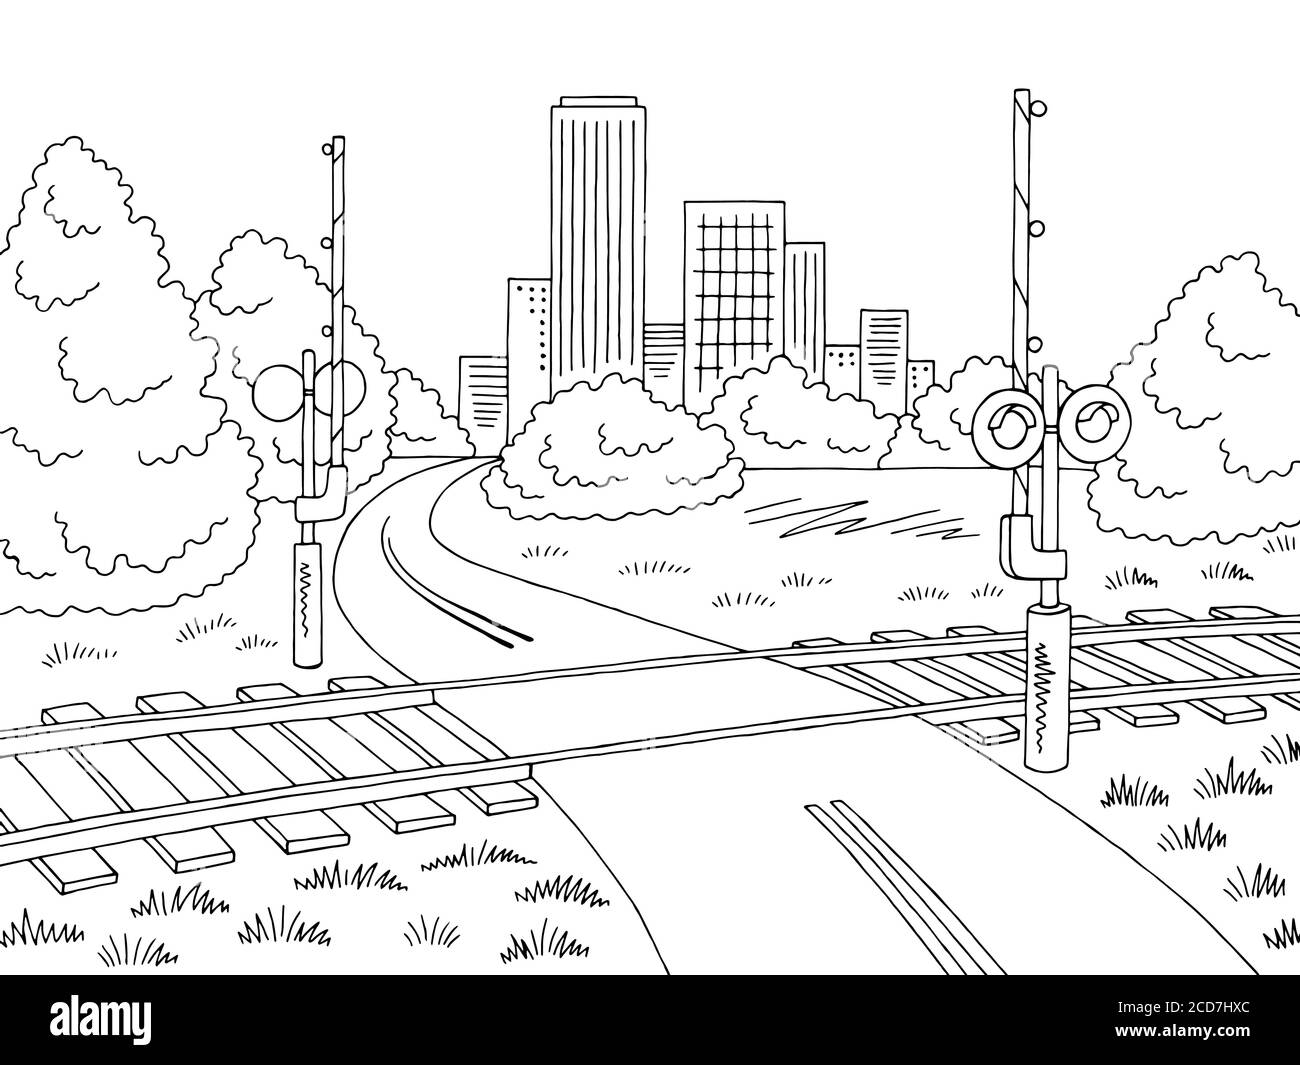 Eisenbahn Kreuzung Straße Grafik schwarz weiß Stadt Landschaft Skizze Illustration vektor Stock Vektor